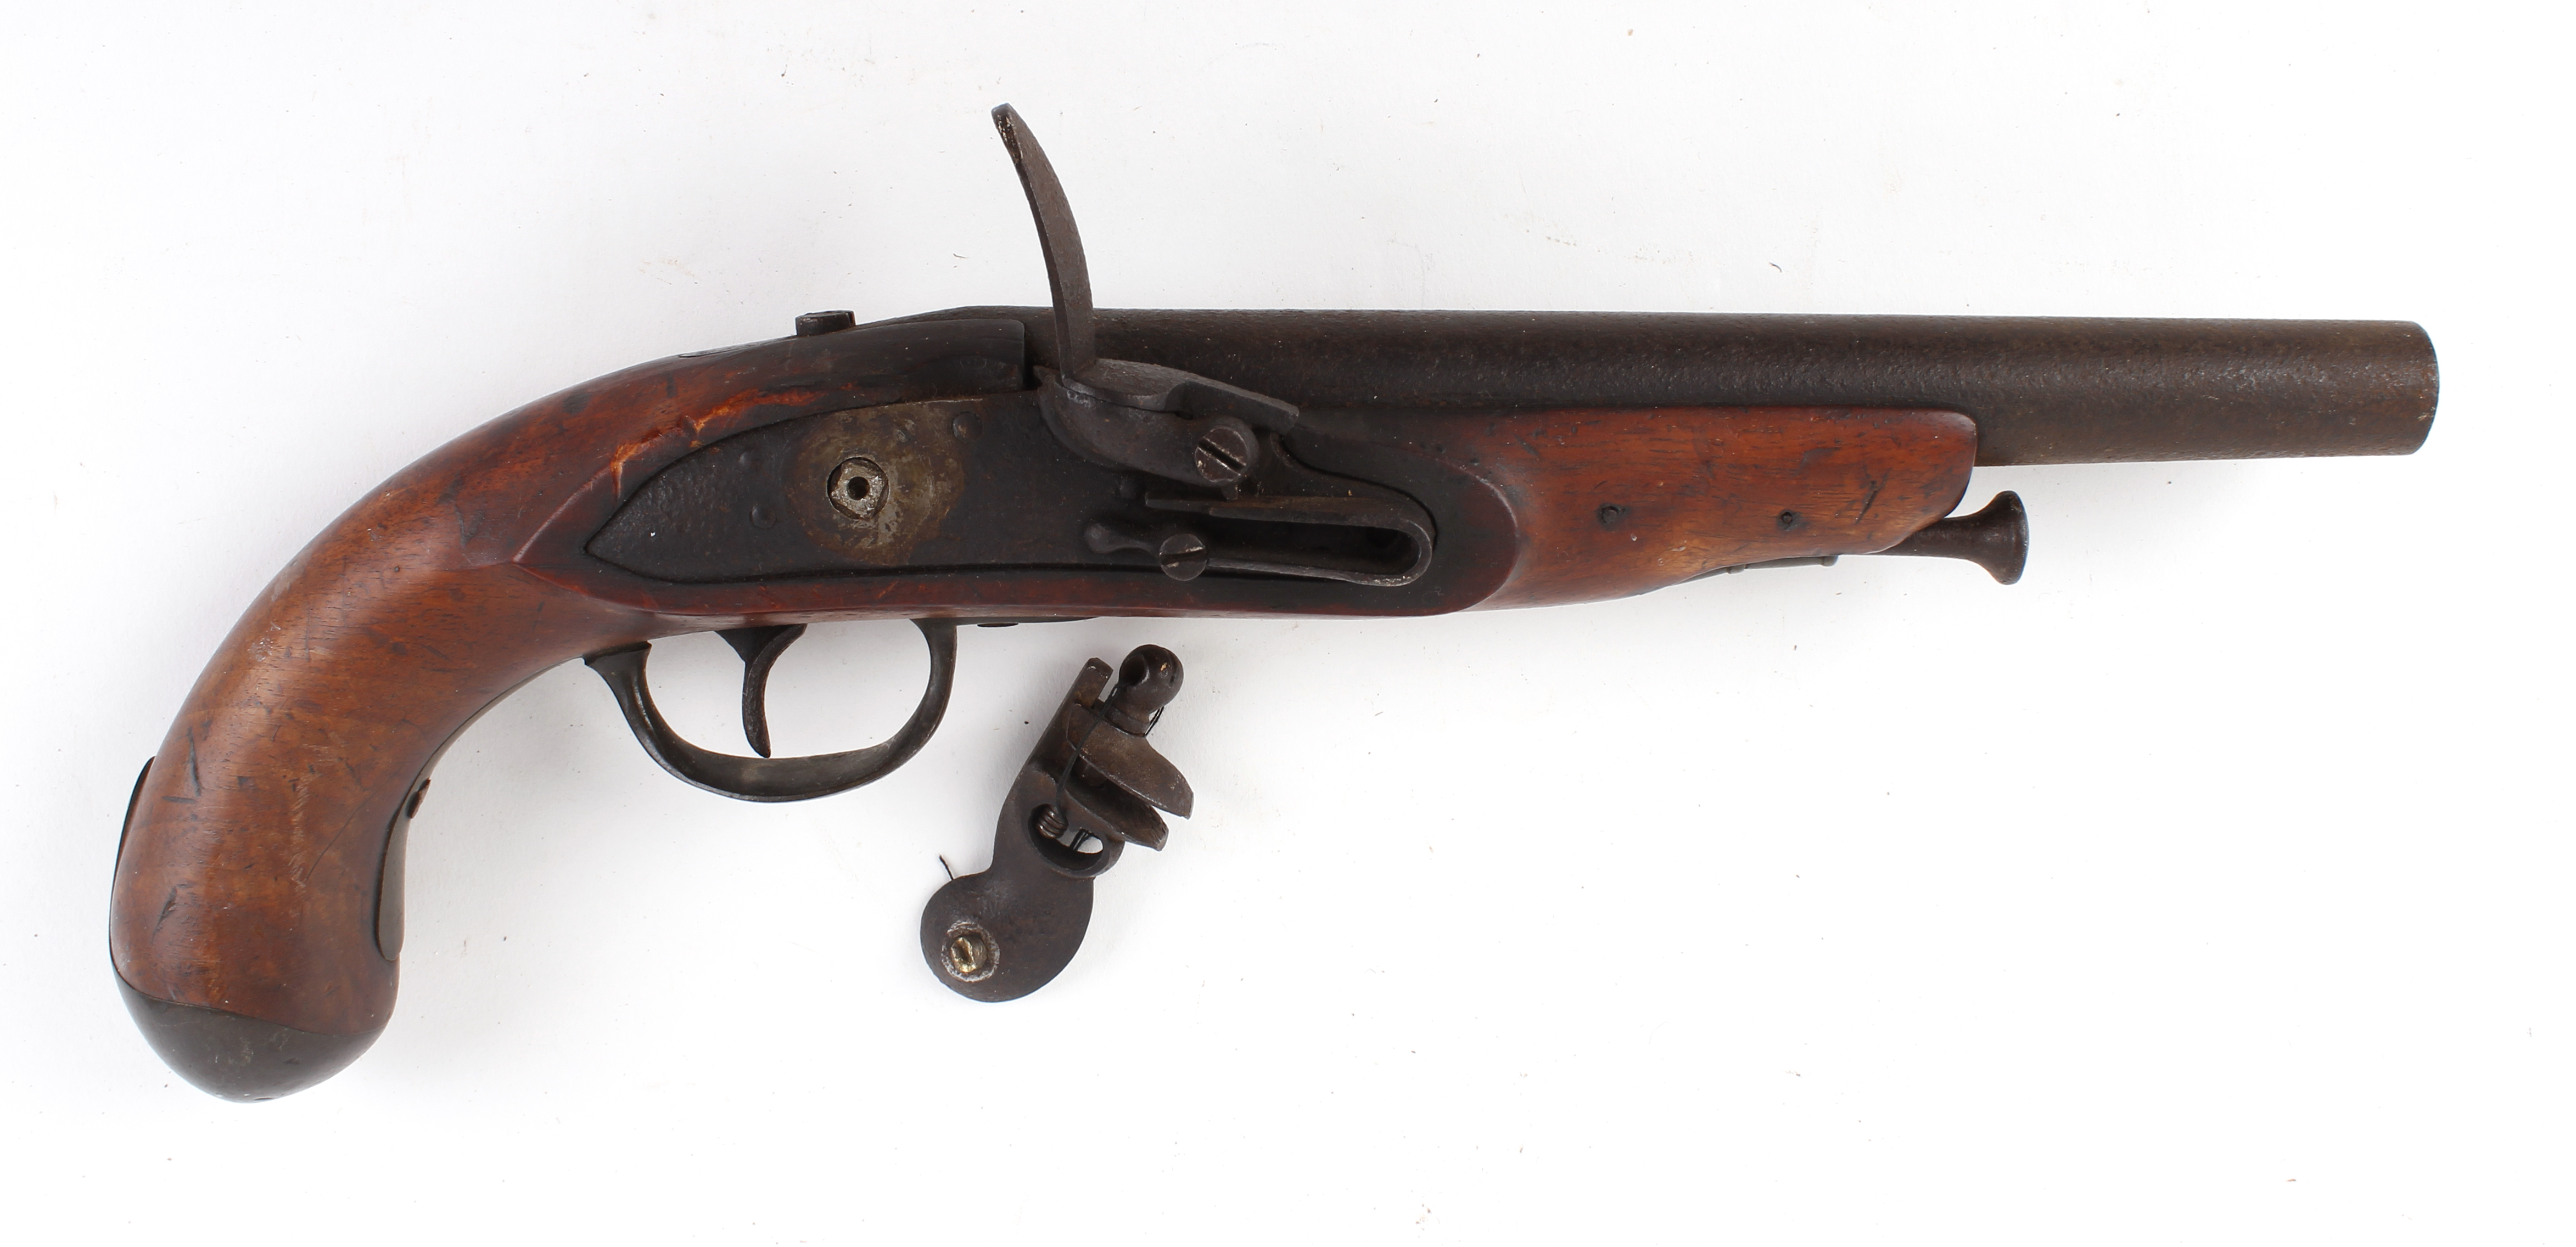 14 bore flintlock pistol, 8 ins half stocked barrel with ramrod, steel lock a/f, brass furniture and